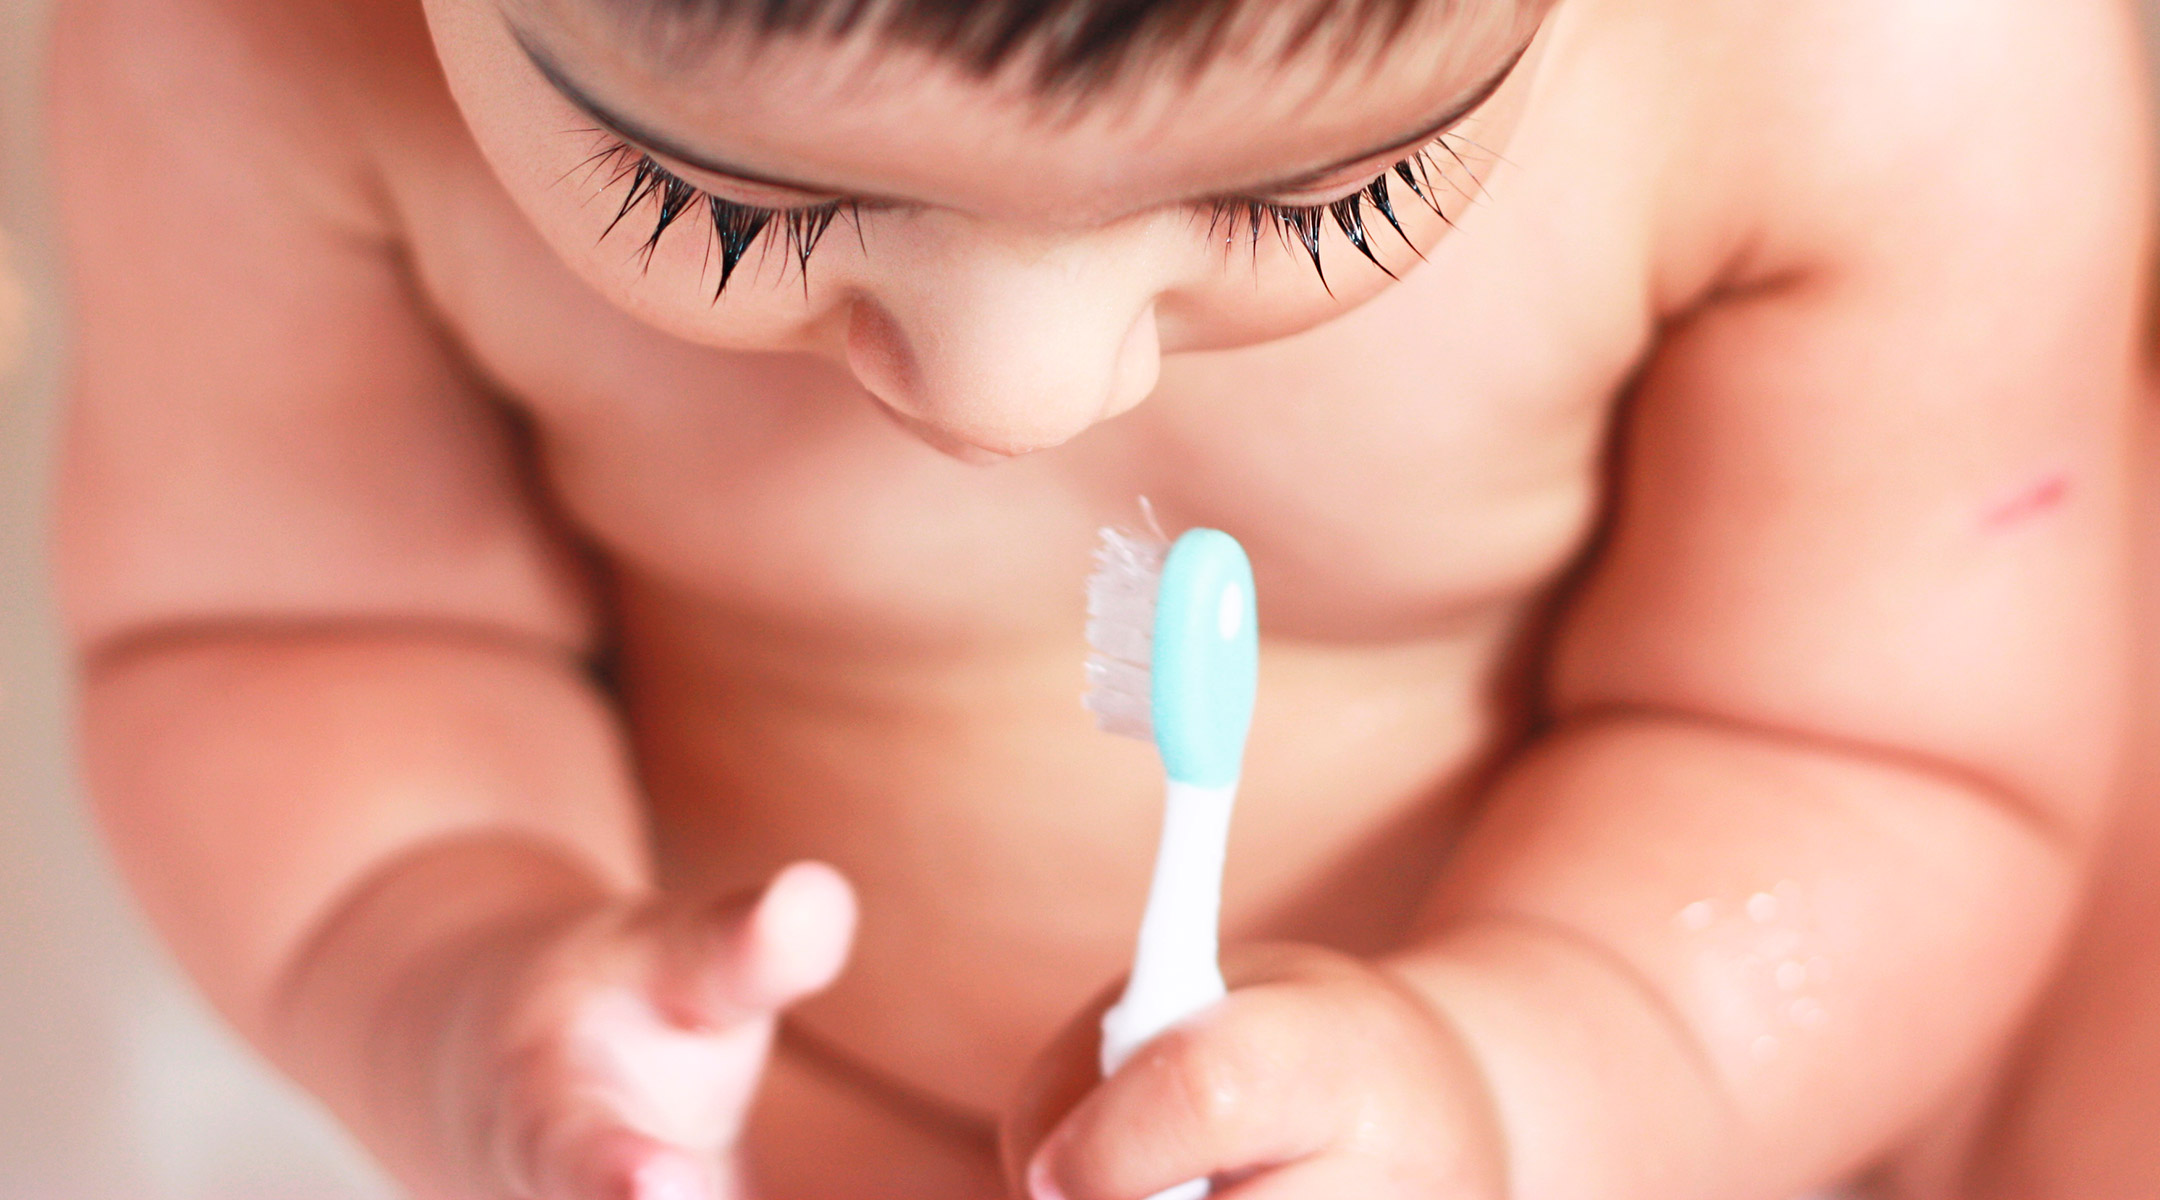 best infant toothbrush